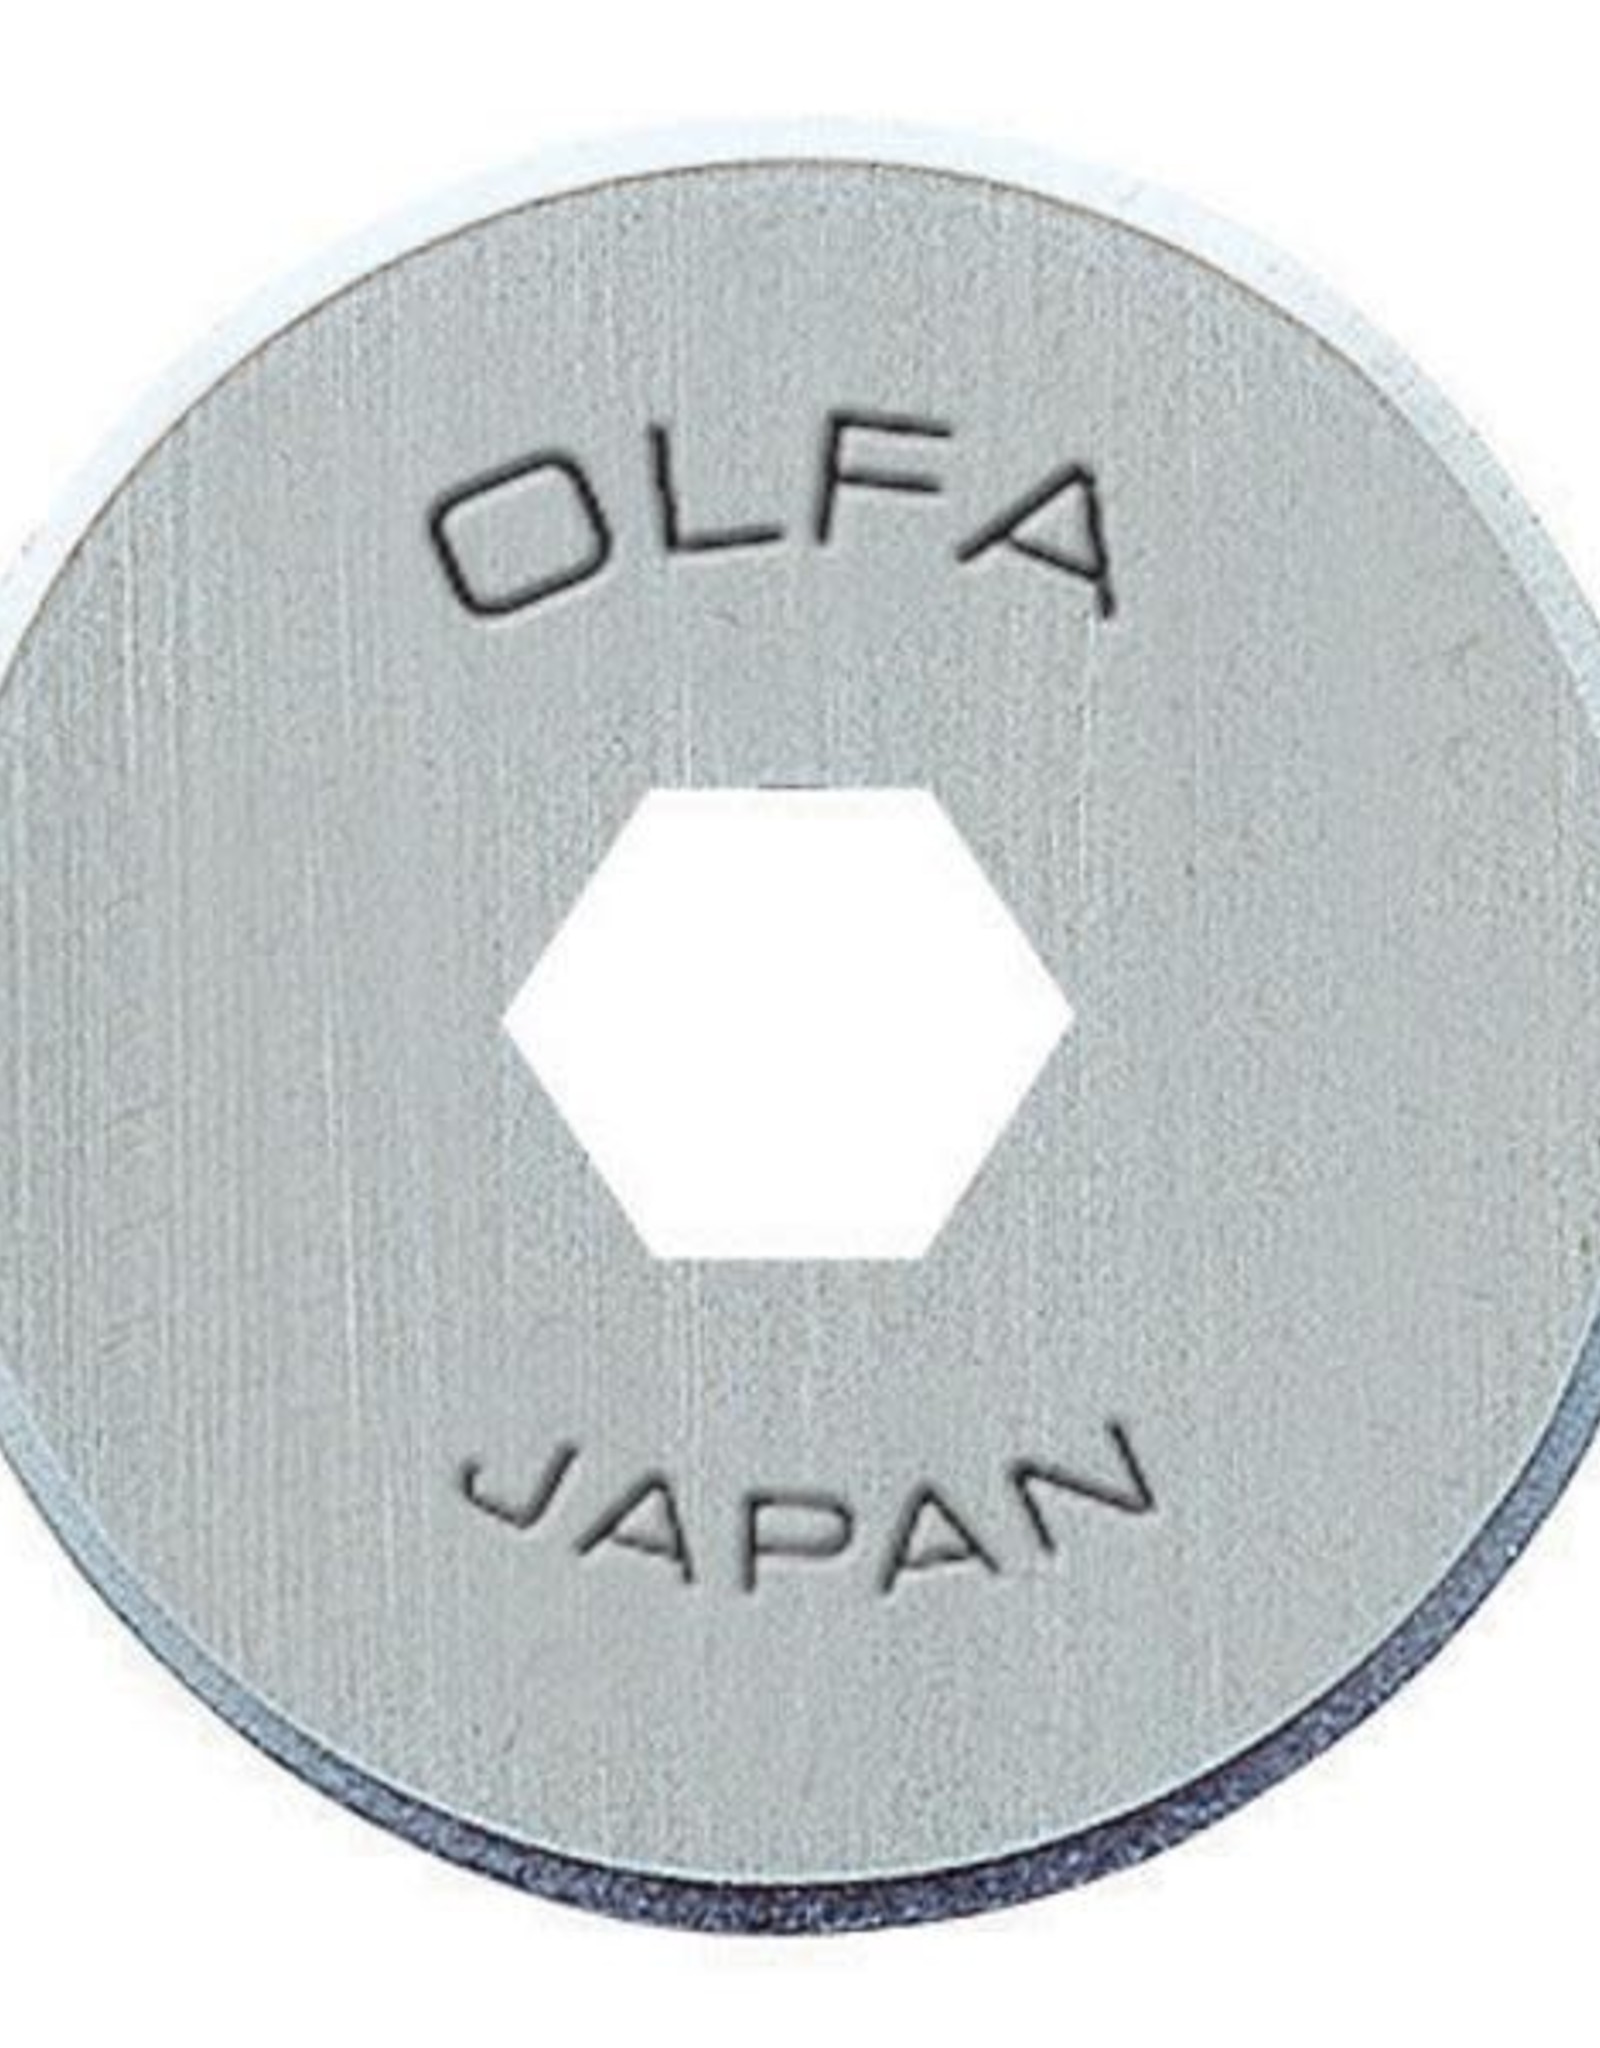 OLFA Olfa 18mm Stainless Steel Rotary Blade, Pack of 2